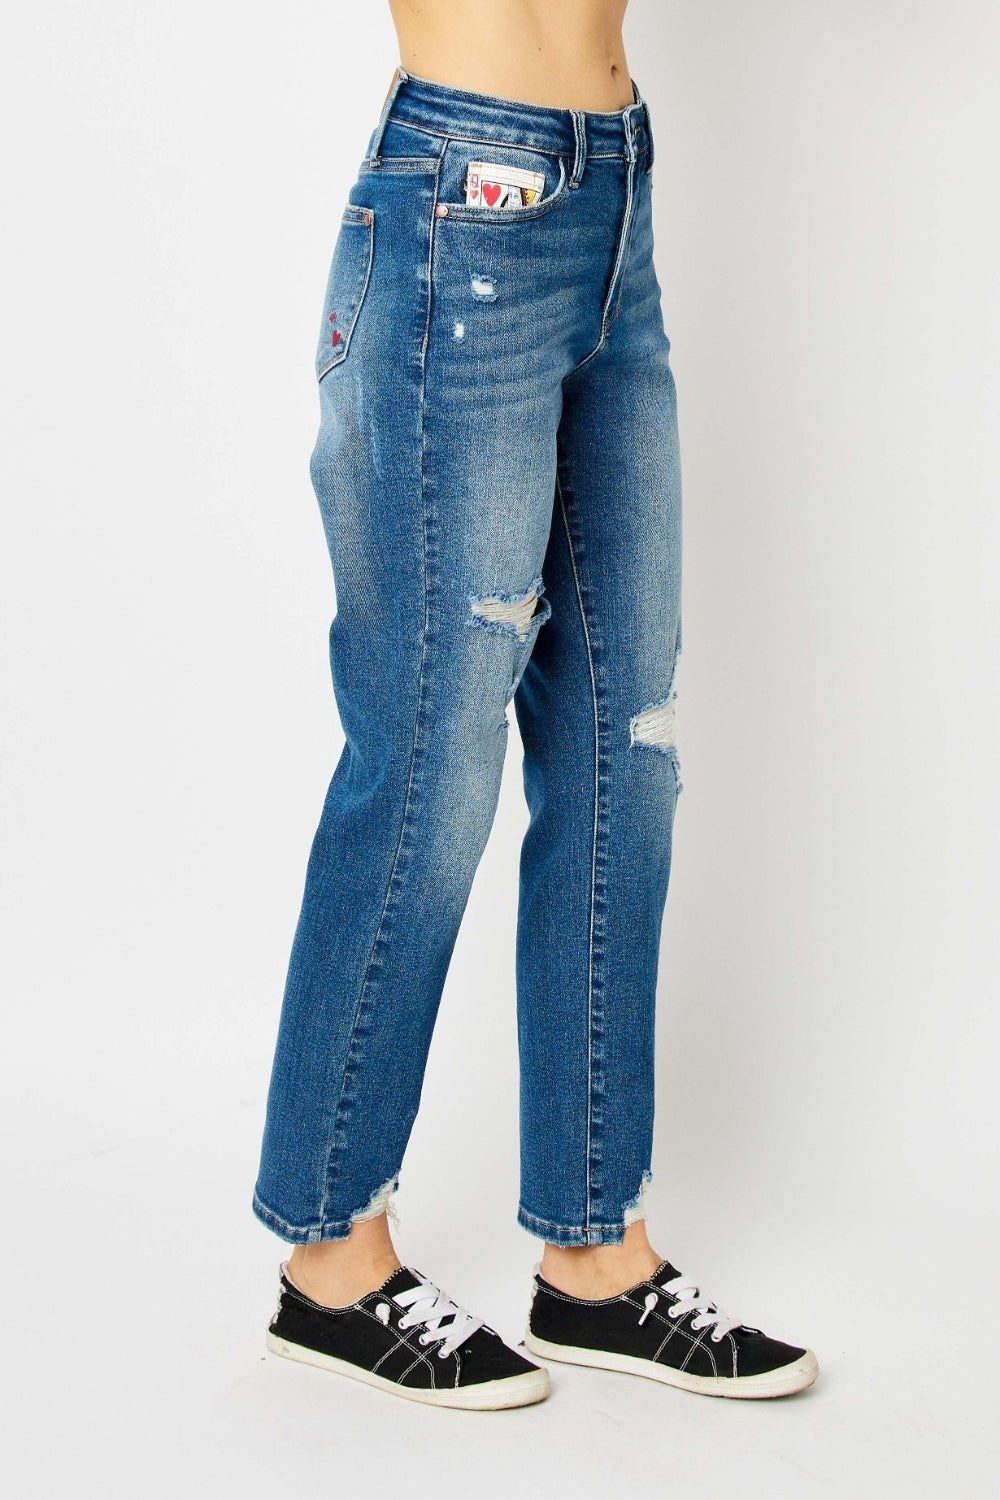 Judy Blue Full Size Distressed Slim Jeans - Scarlett's Riverside Boutique